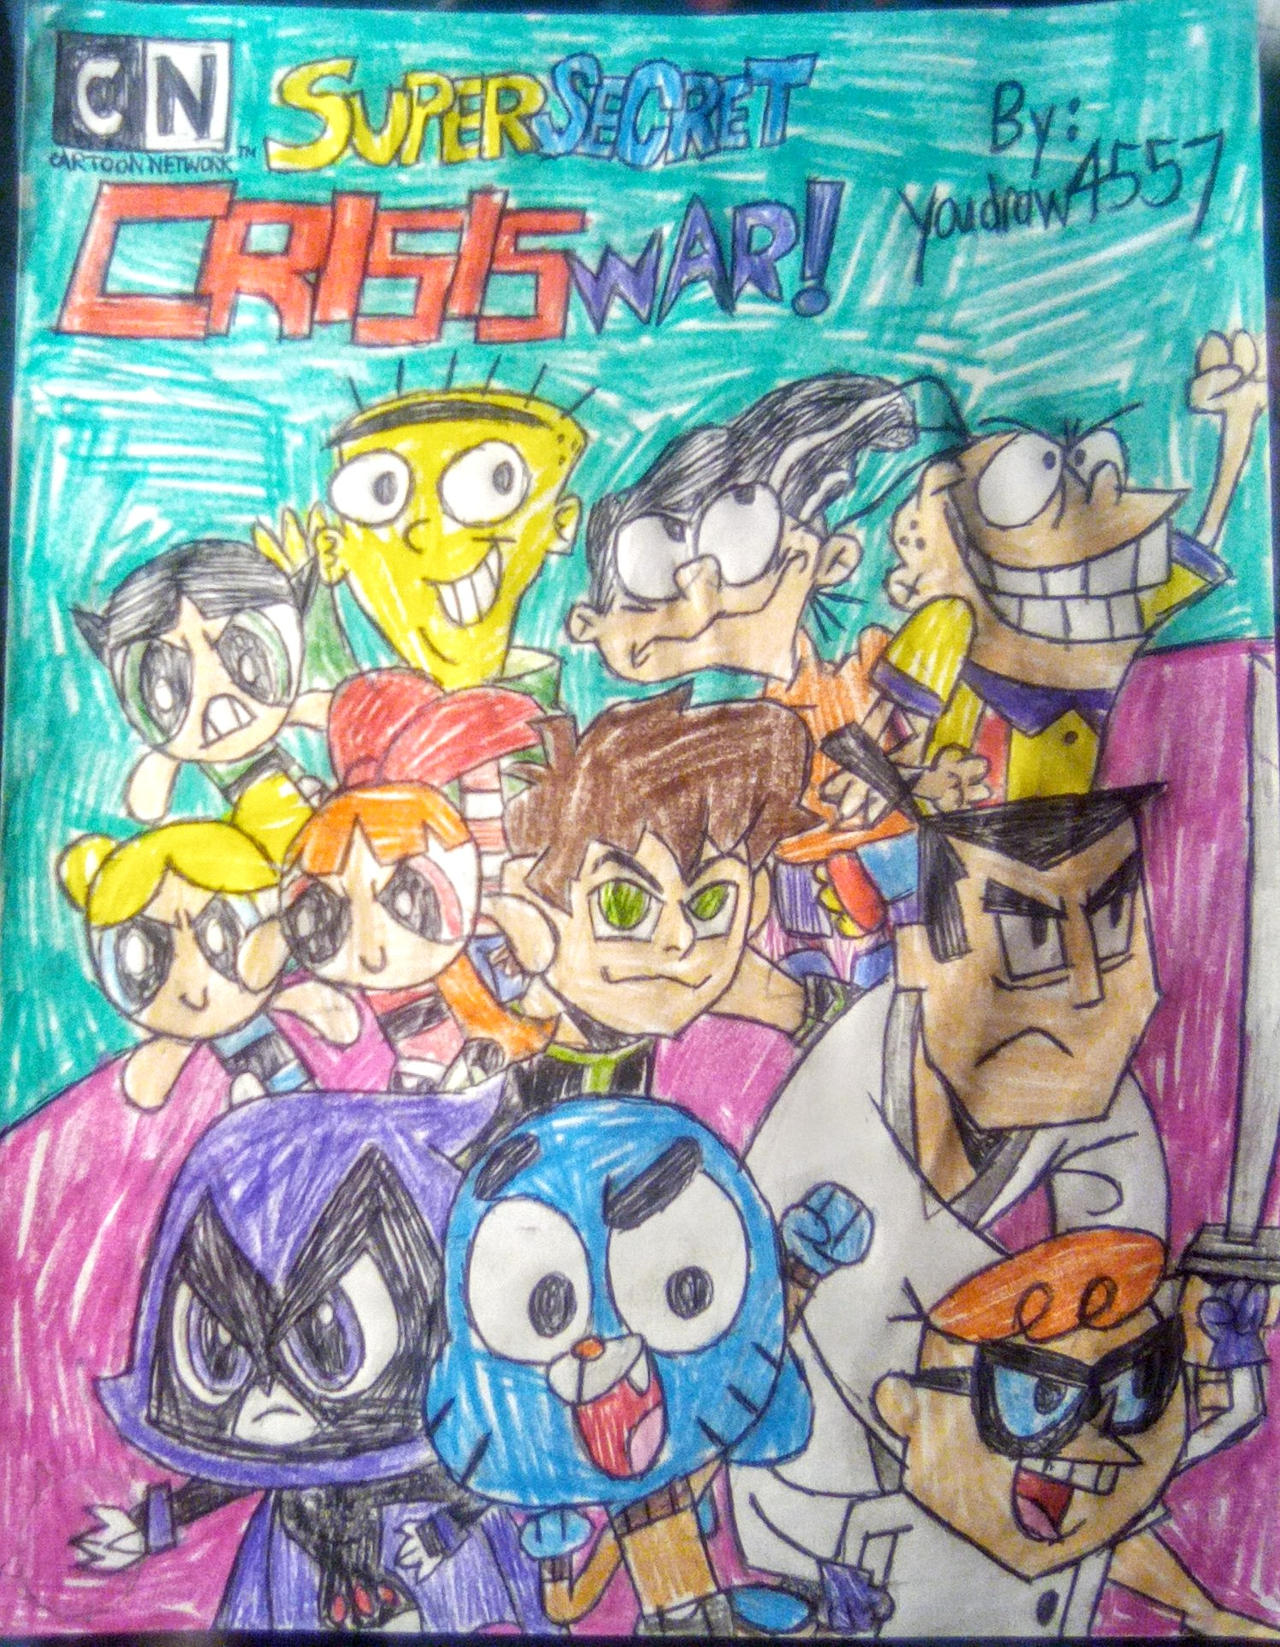 Cartoon Network's Super Secret Crisis War by youdraw4557 on DeviantArt